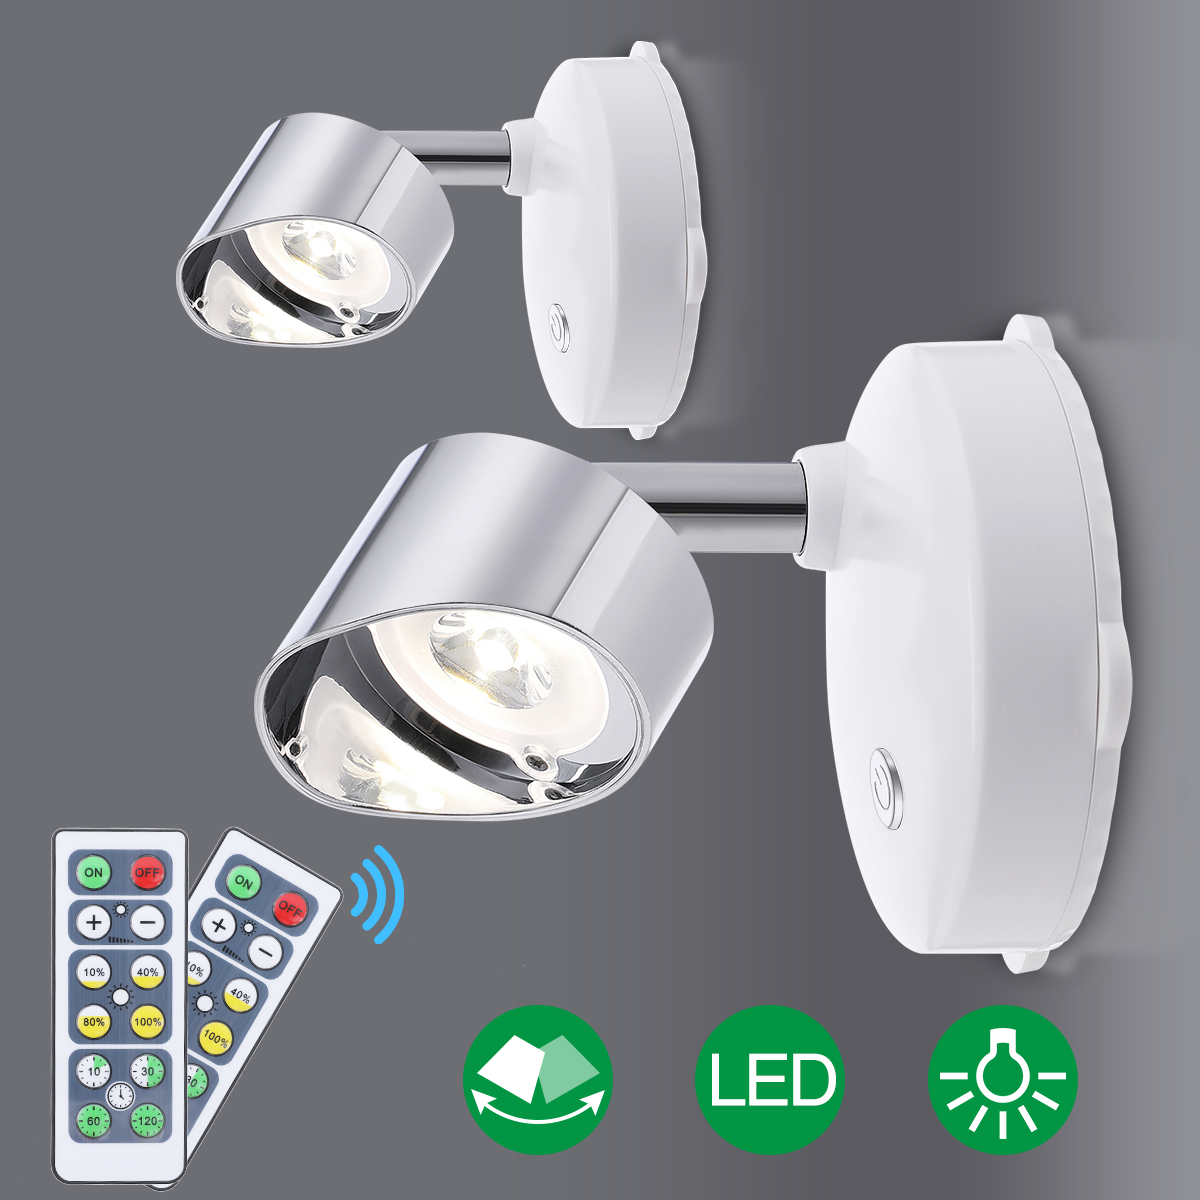 2PCS-Elfeland-Battery-Powered-LED-Cabinet-Light-Remote-Control-Spotlighting-for-Showcase-Home-Hotel-1675433-1